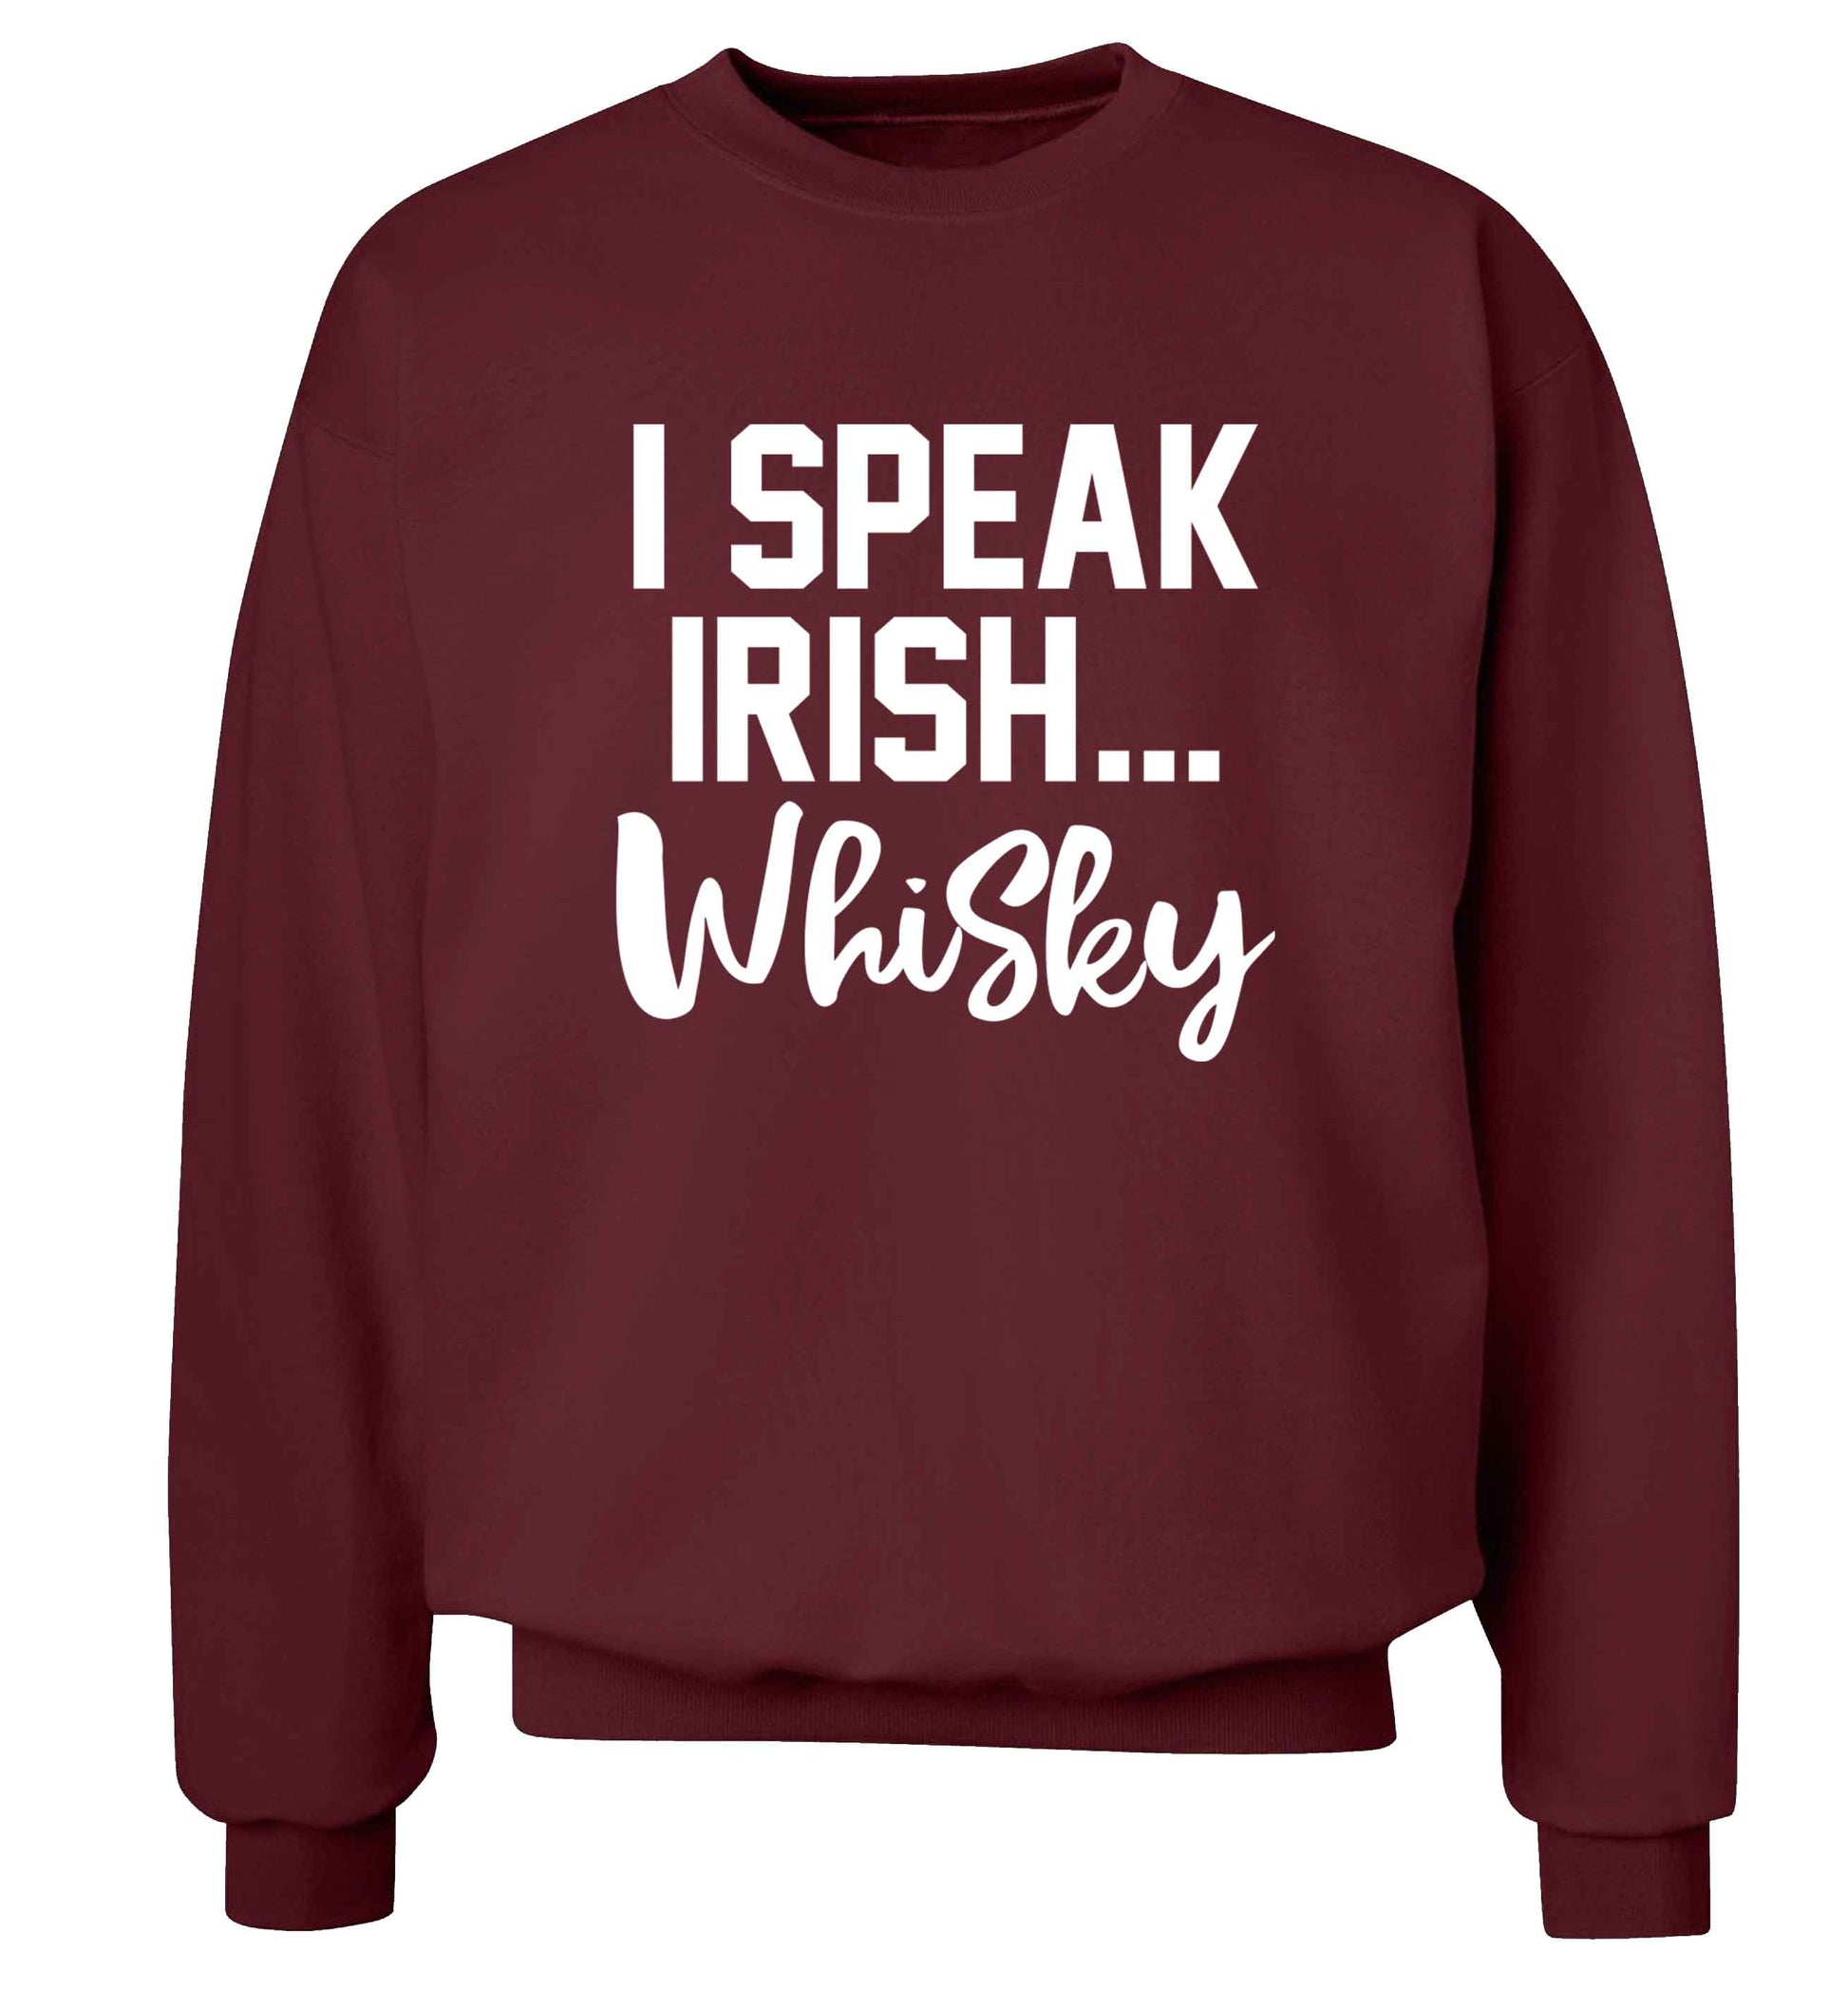 I speak Irish whisky adult's unisex maroon sweater 2XL